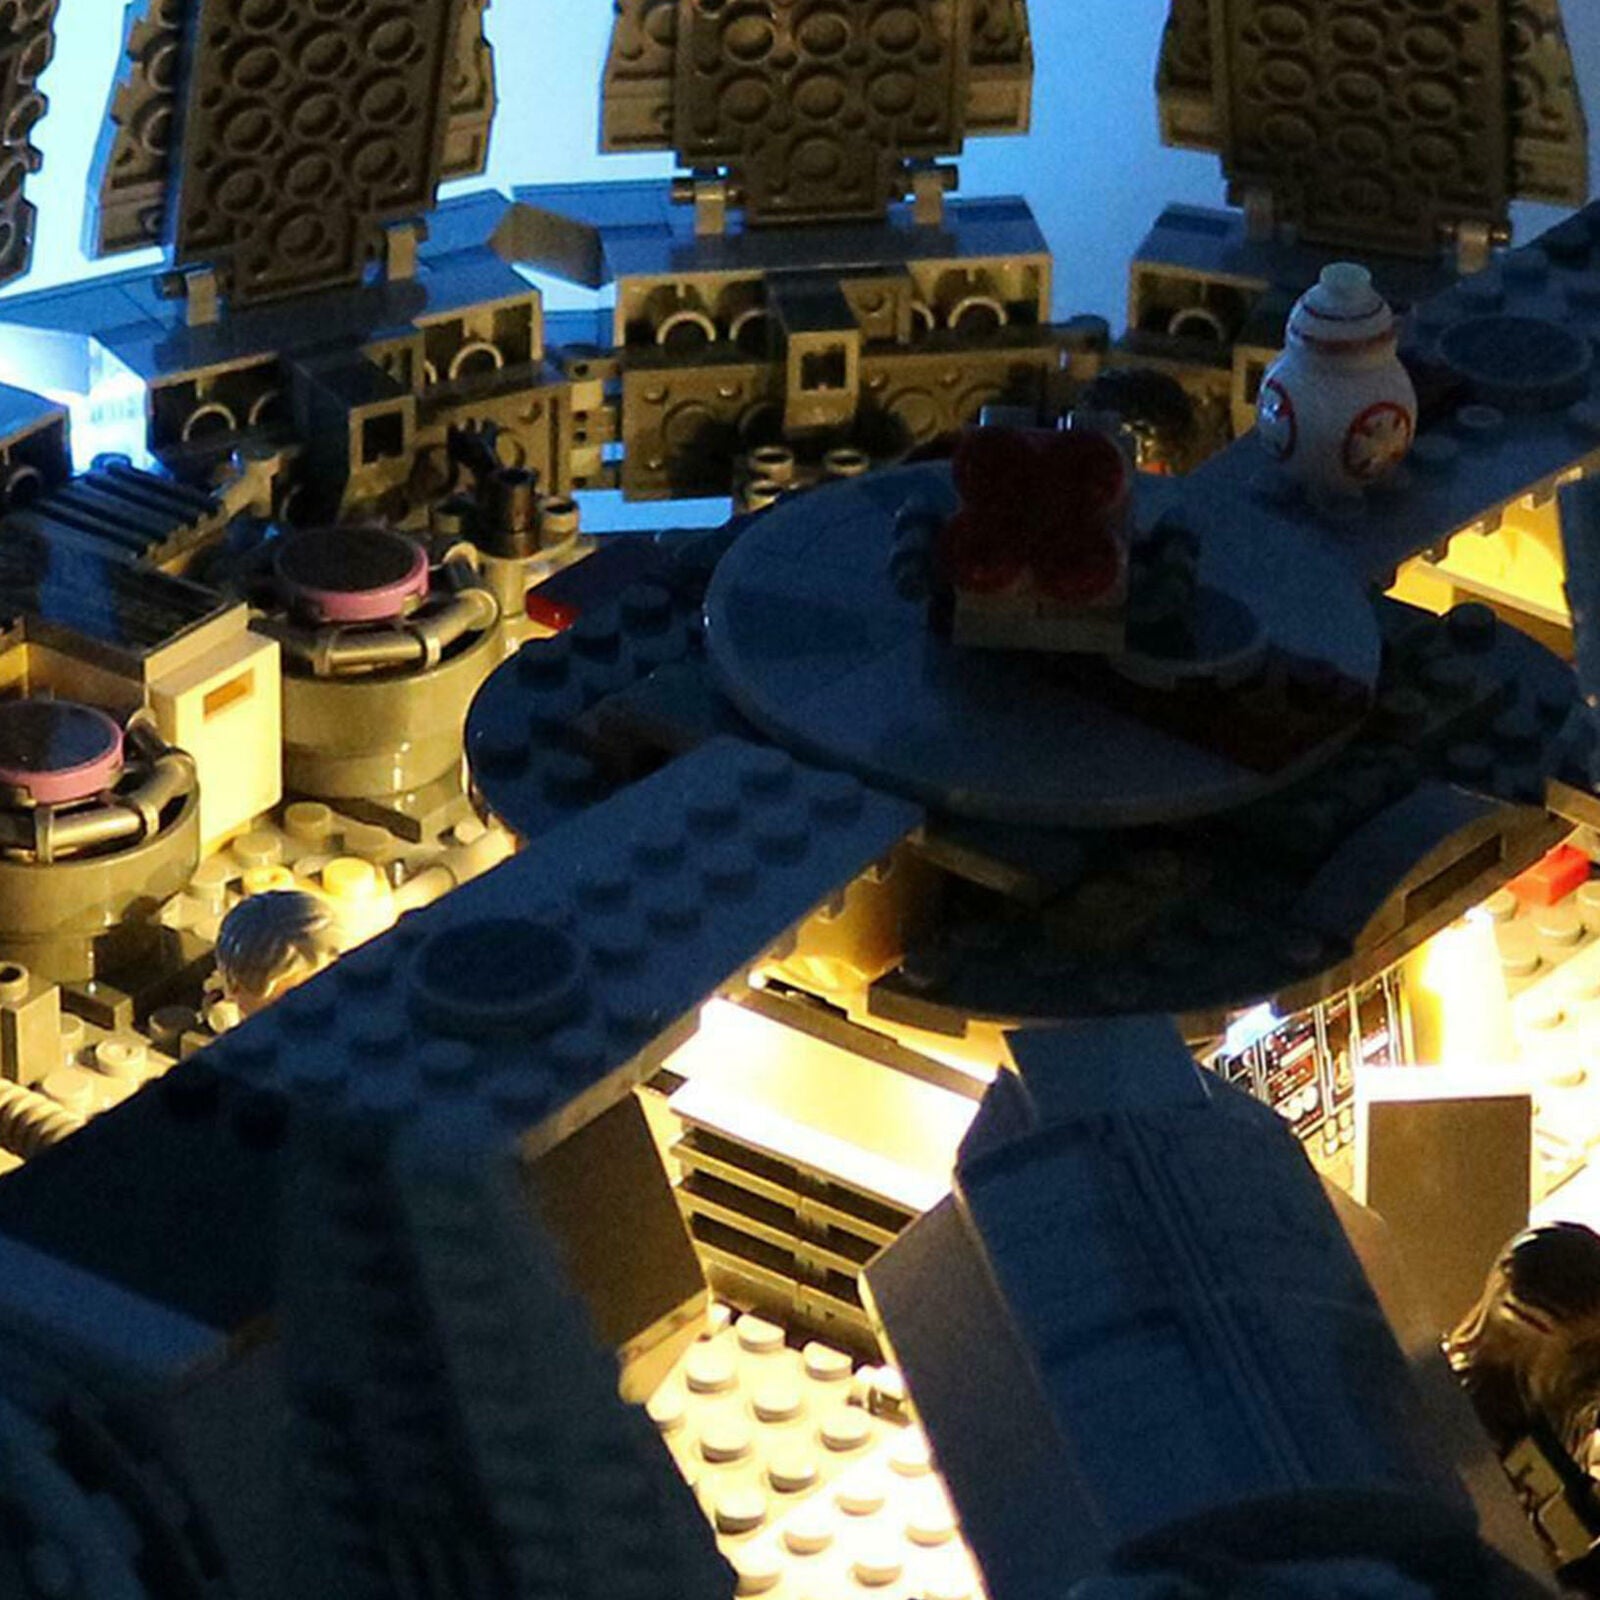 Kyglaring LED Light for Lego 75105 Star Wars Millennium Falcon Lighting Kit New